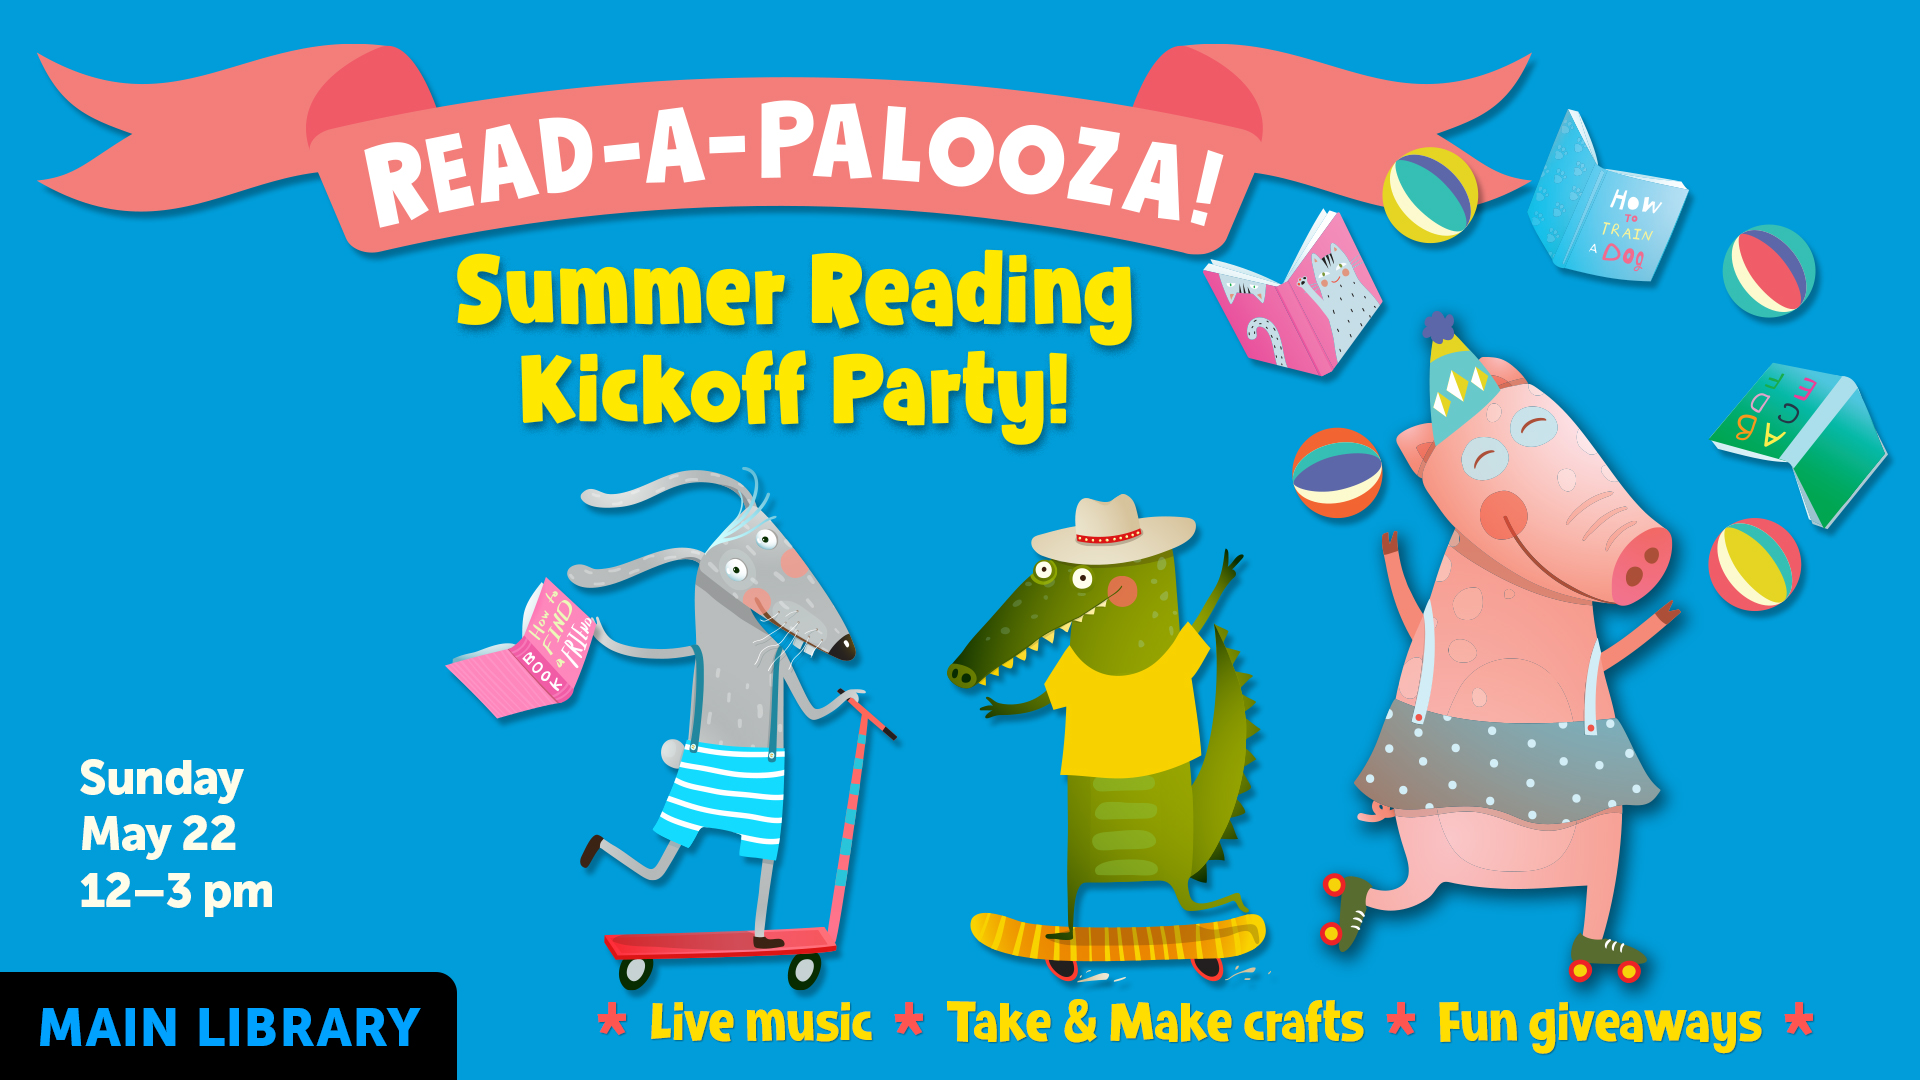 Image for Read-a-palooza! Summer Reading Kickoff Party